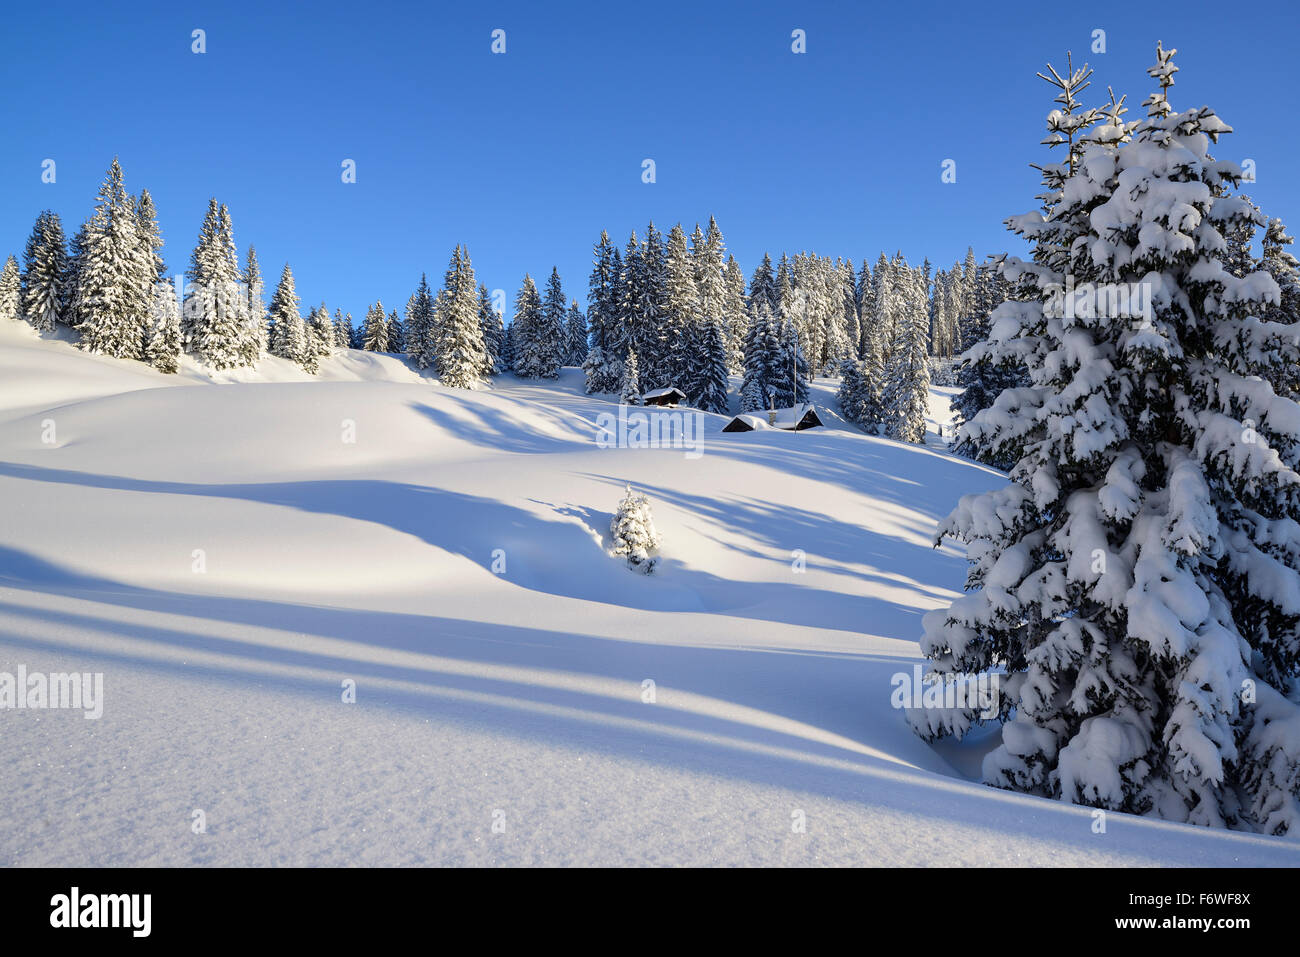 Snow-covered alps and trees, Teufelstaettkopf, Puerschling, Ammergauer Alps, Upper Bavaria, Bavaria, Germany Stock Photo